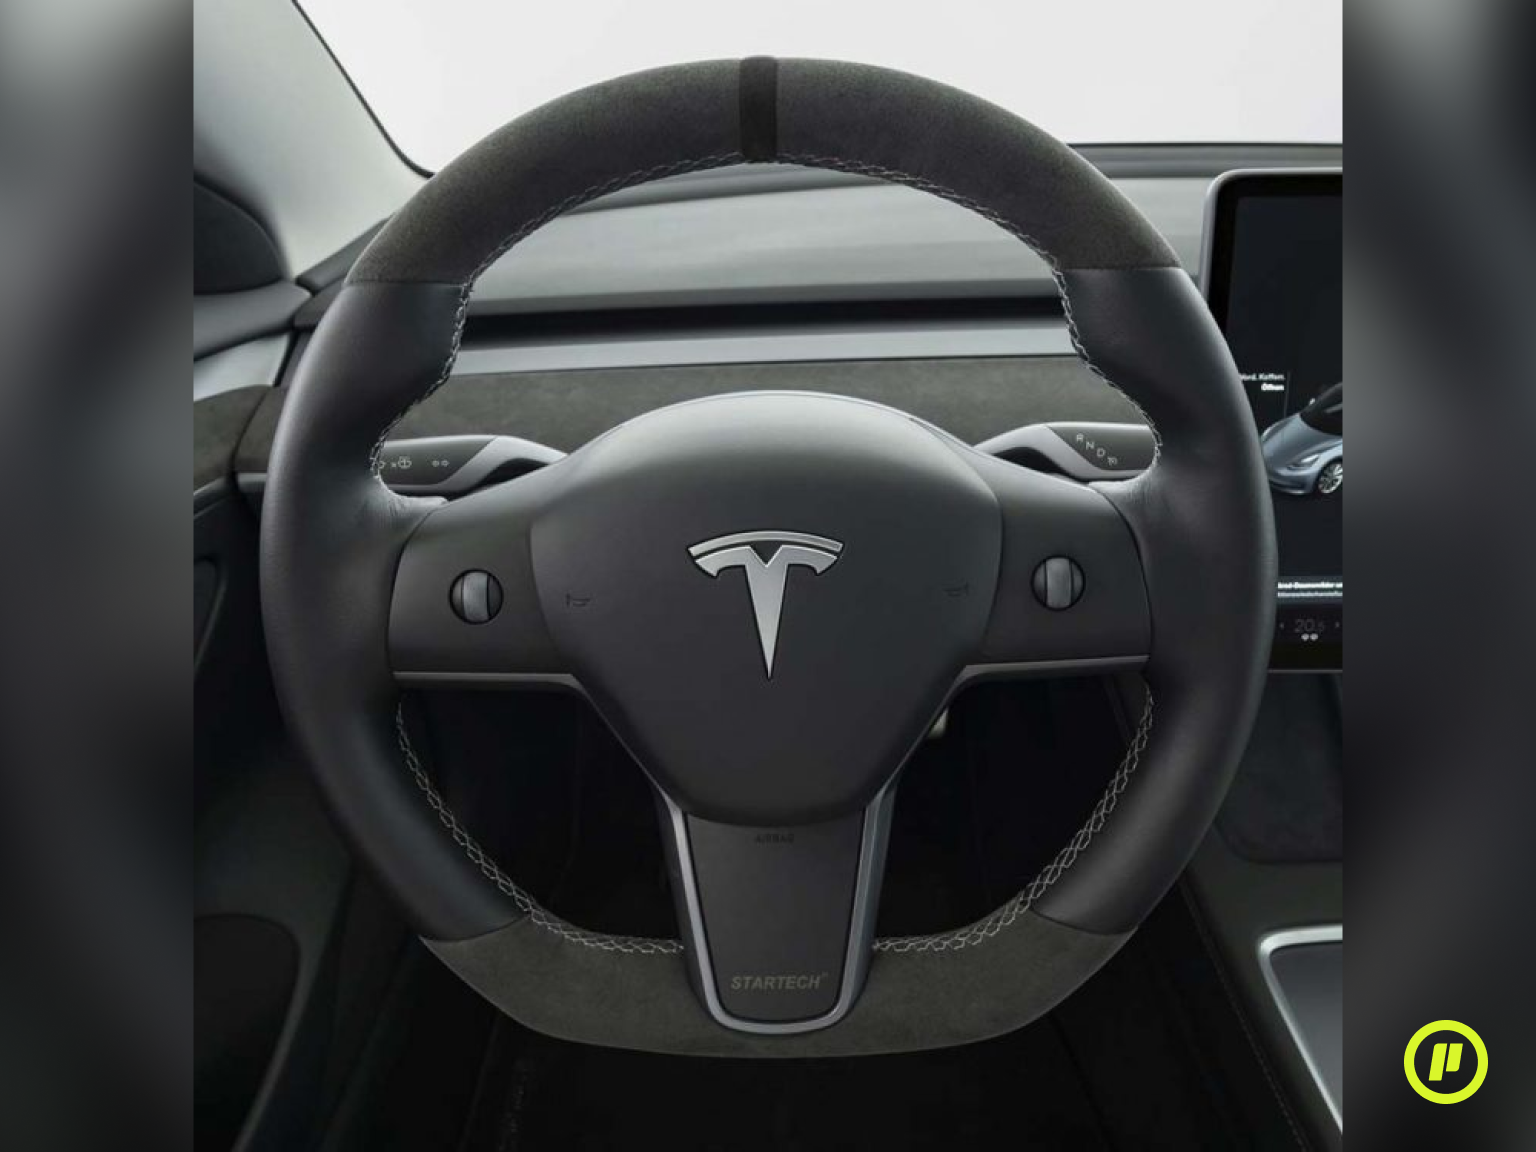 Startech Leather-Alcantara Sport Steering Wheel for Tesla Model 3 (2017+)